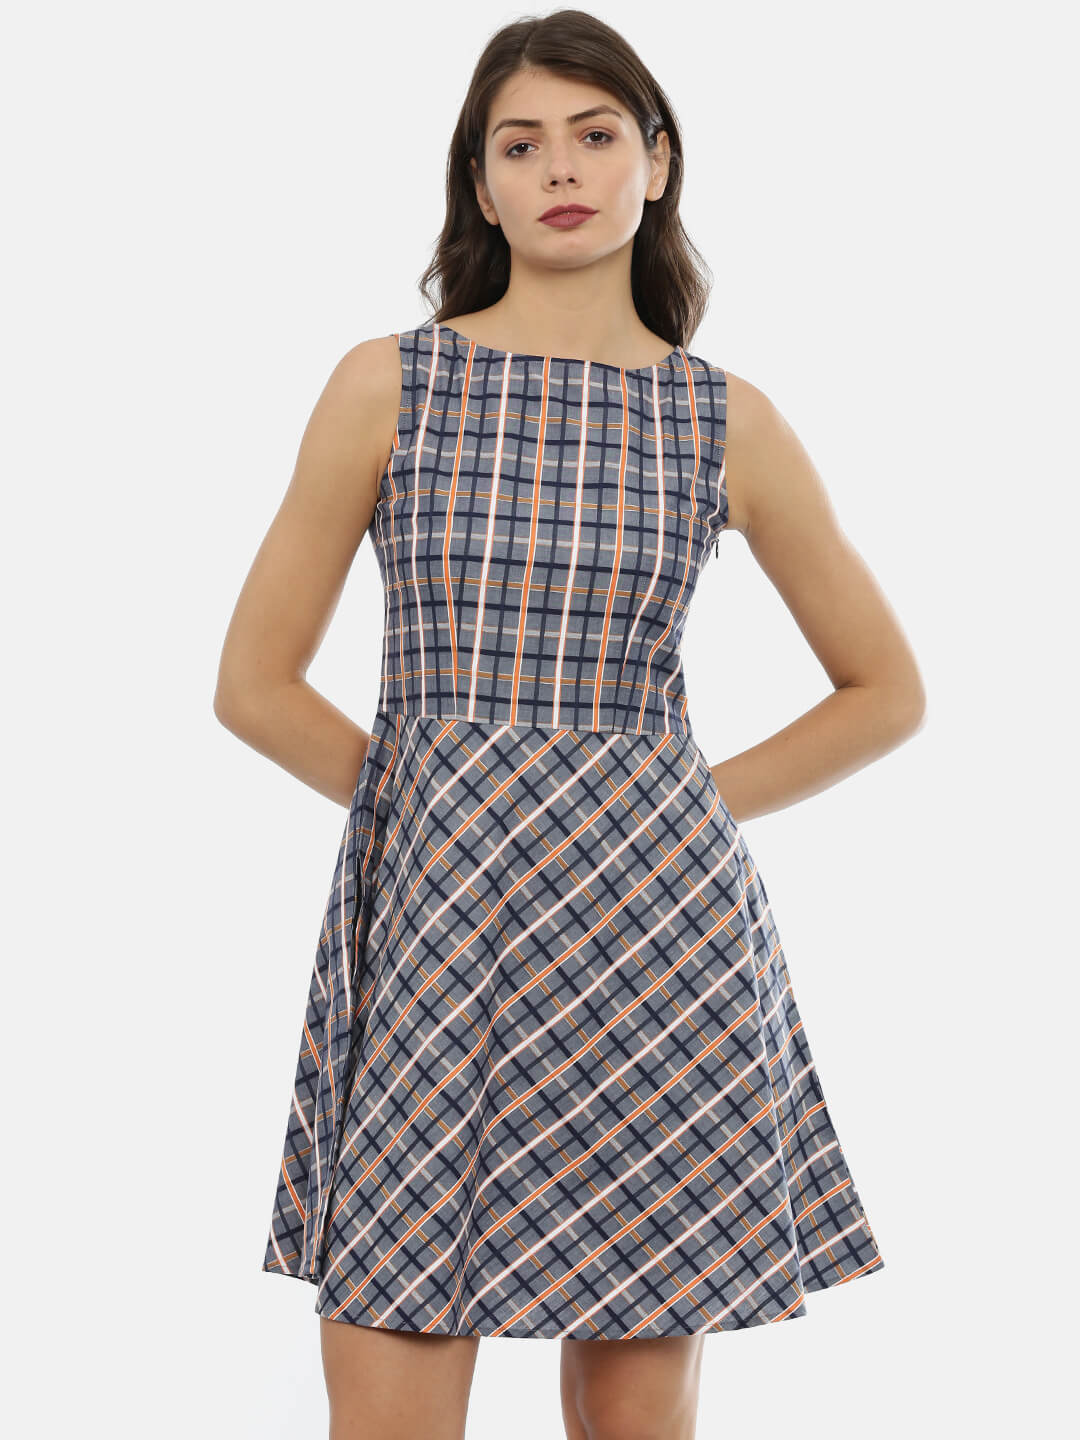 Sleeveless Checkered Dress